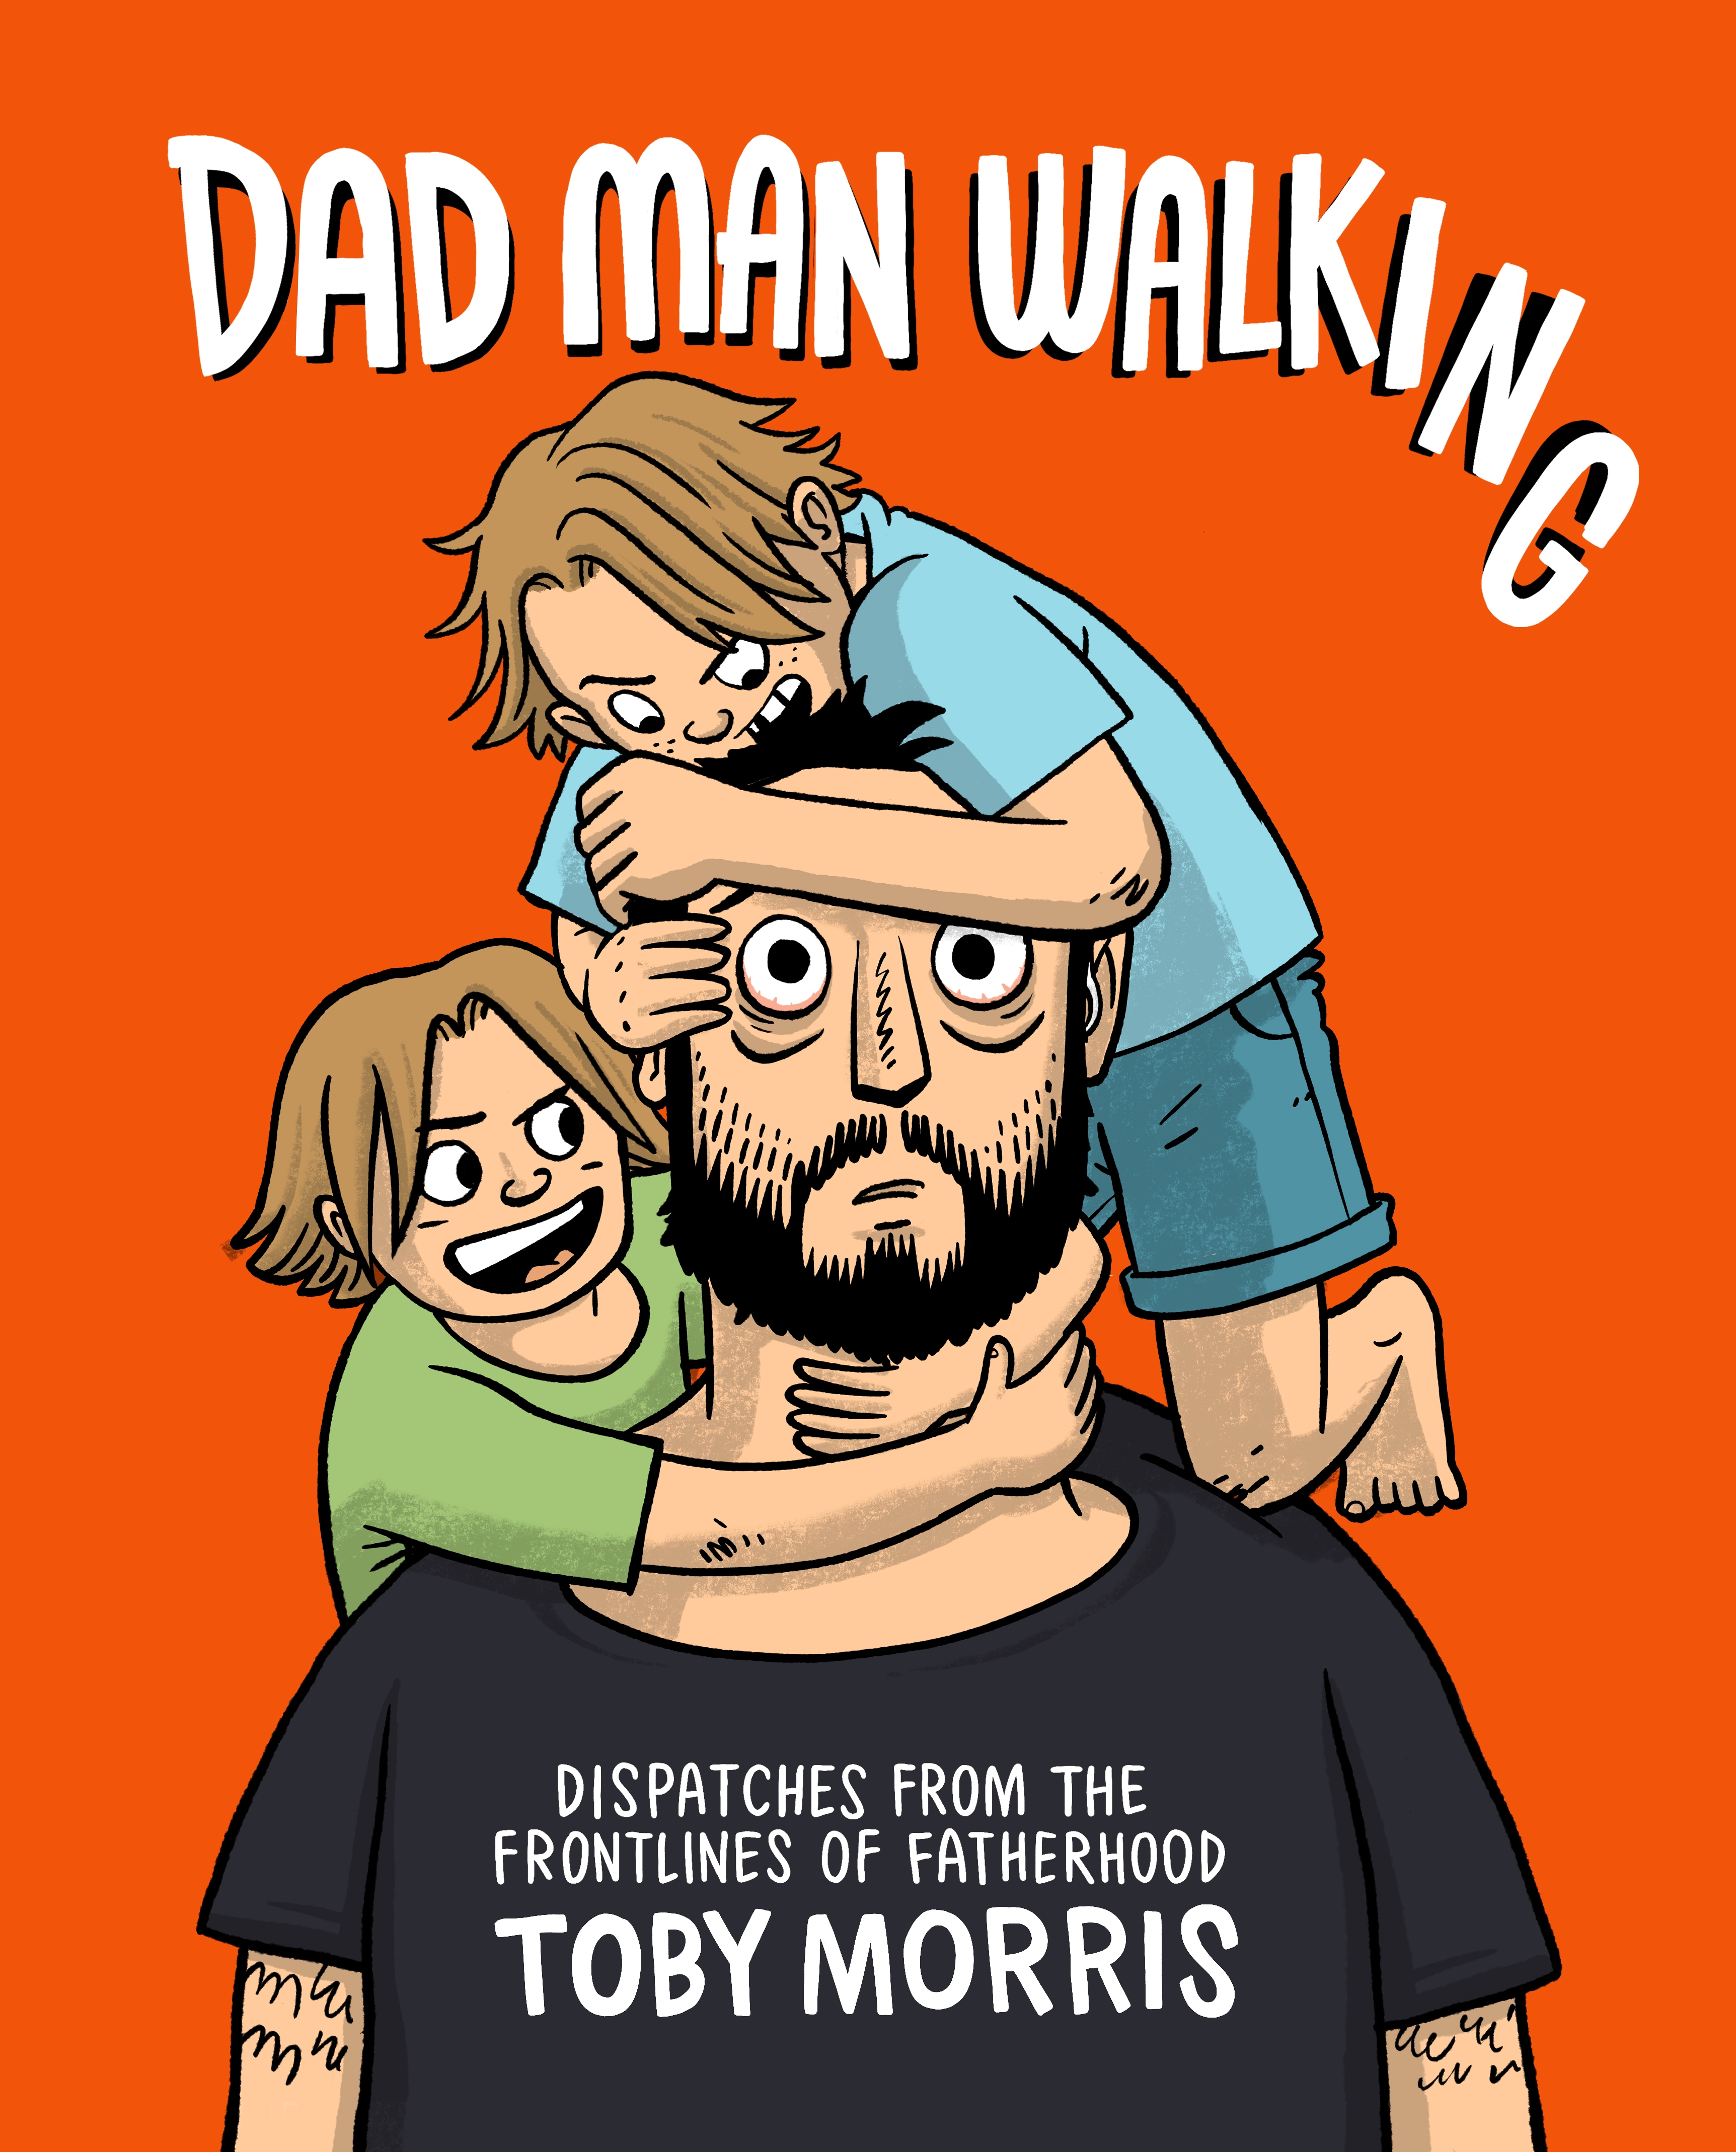 Dad Man Walking by Toby Morris